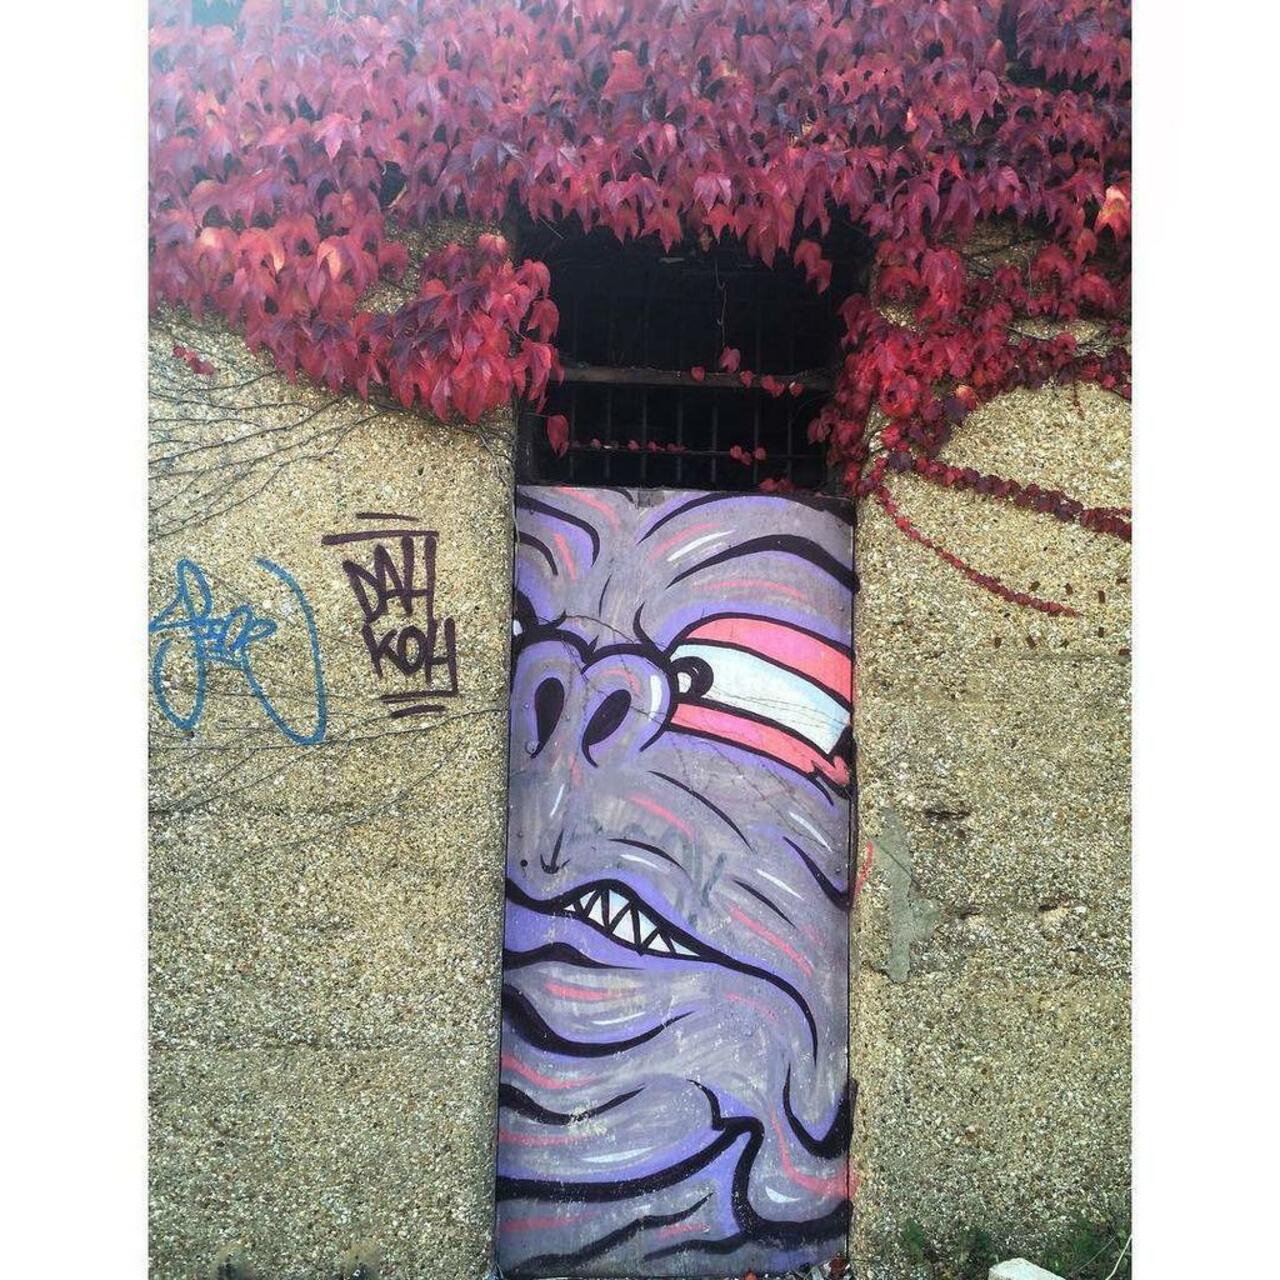 RT @artpushr: via #girlownscar "http://bit.ly/1j80H8A" #graffiti #streetart http://t.co/HR02nkTP69